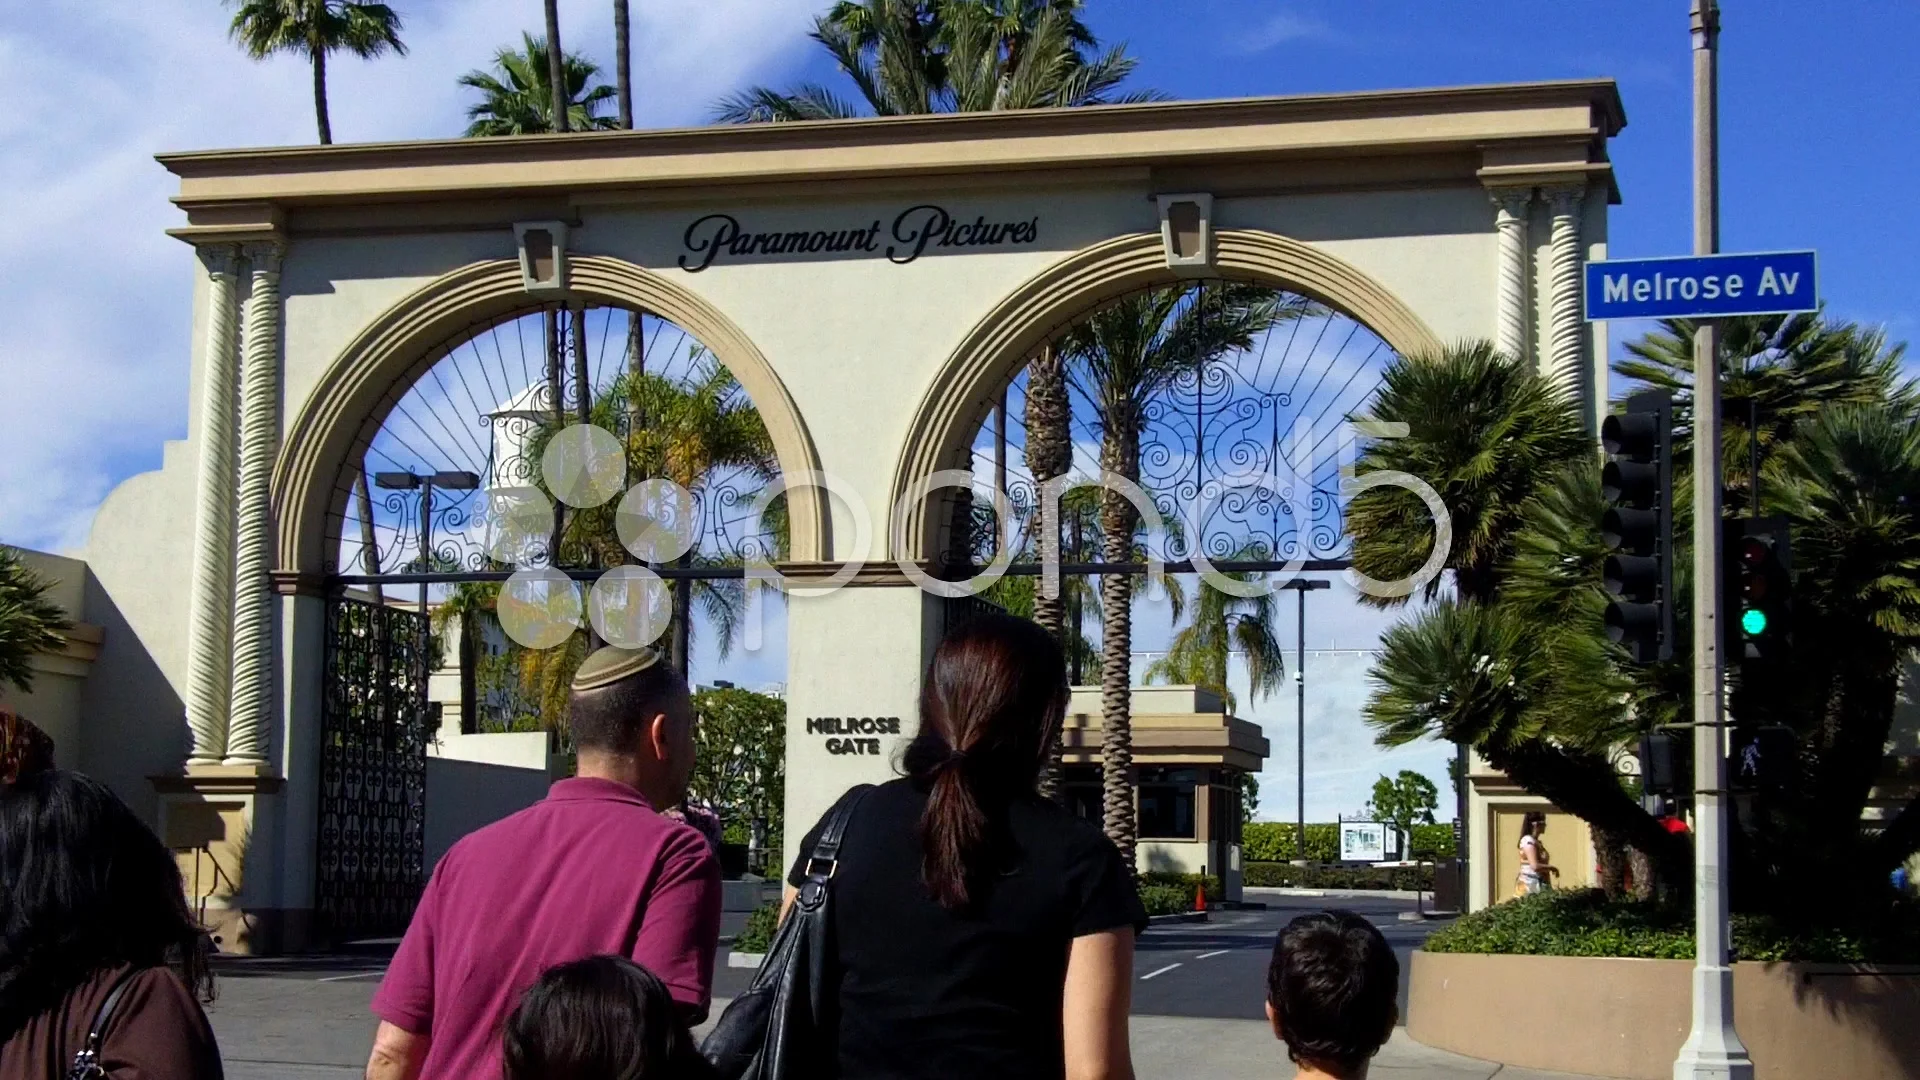 Paramount Pictures Movie Studio Lot Melr... | Stock Video | Pond5